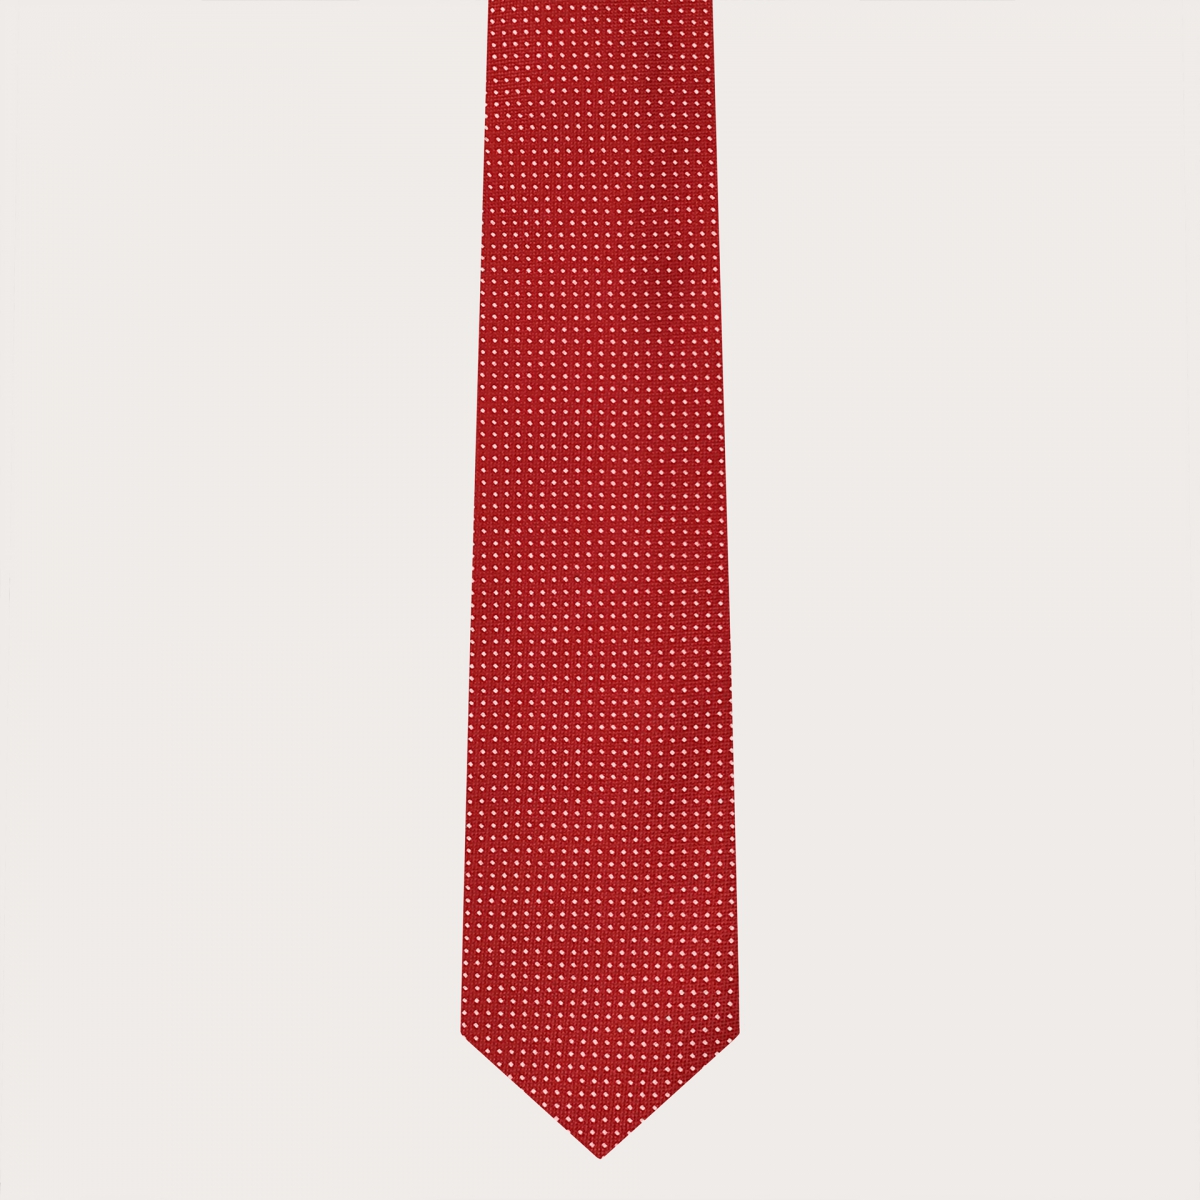 BRUCLE Abgestimmte Hosenträger und Krawatte aus Seide, rotes Punktmuster